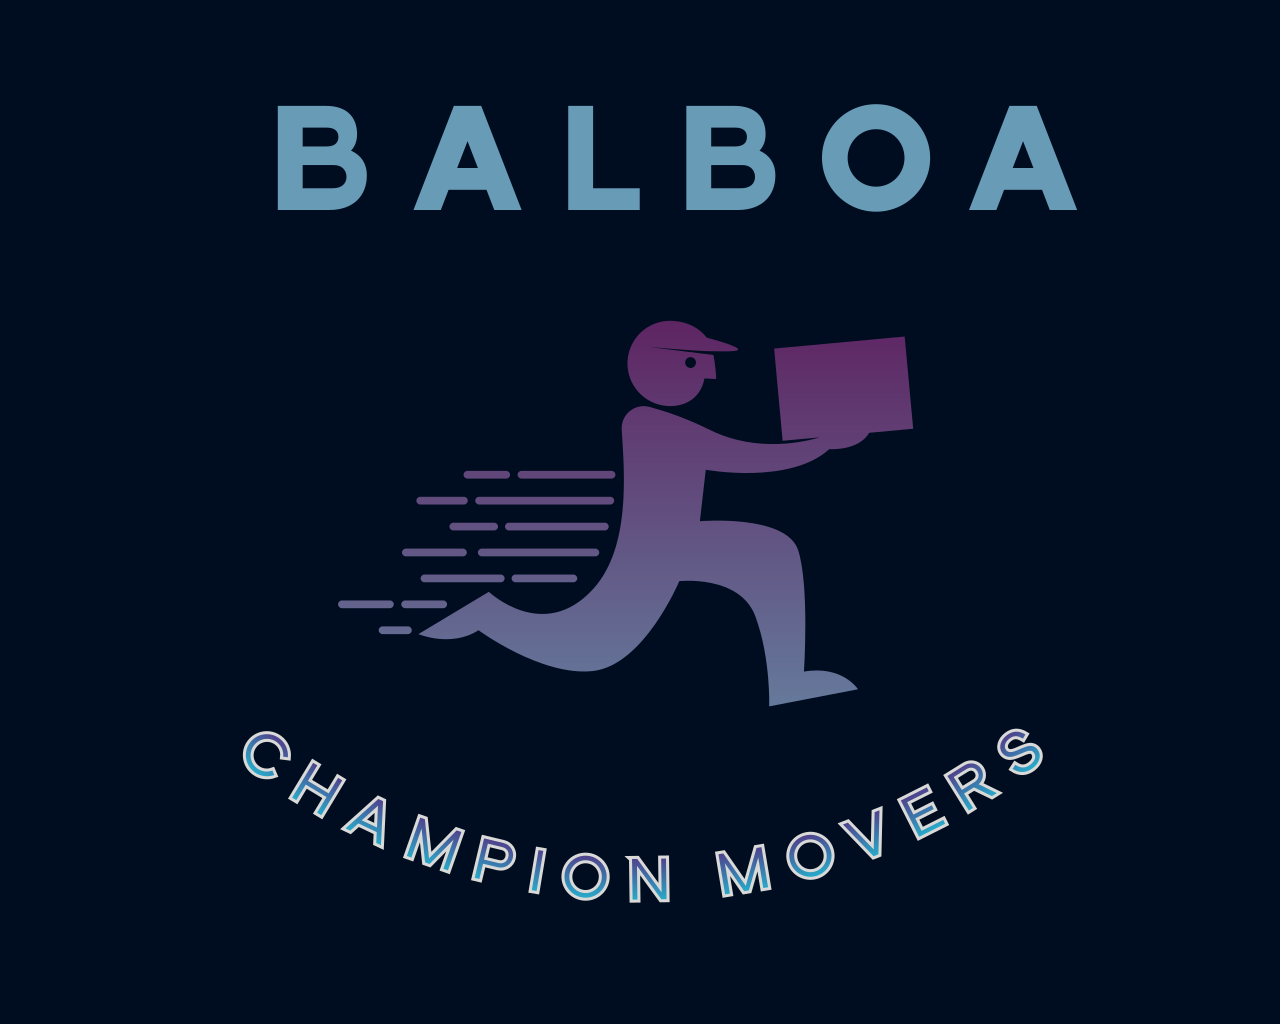 Balboa Champion Movers logo